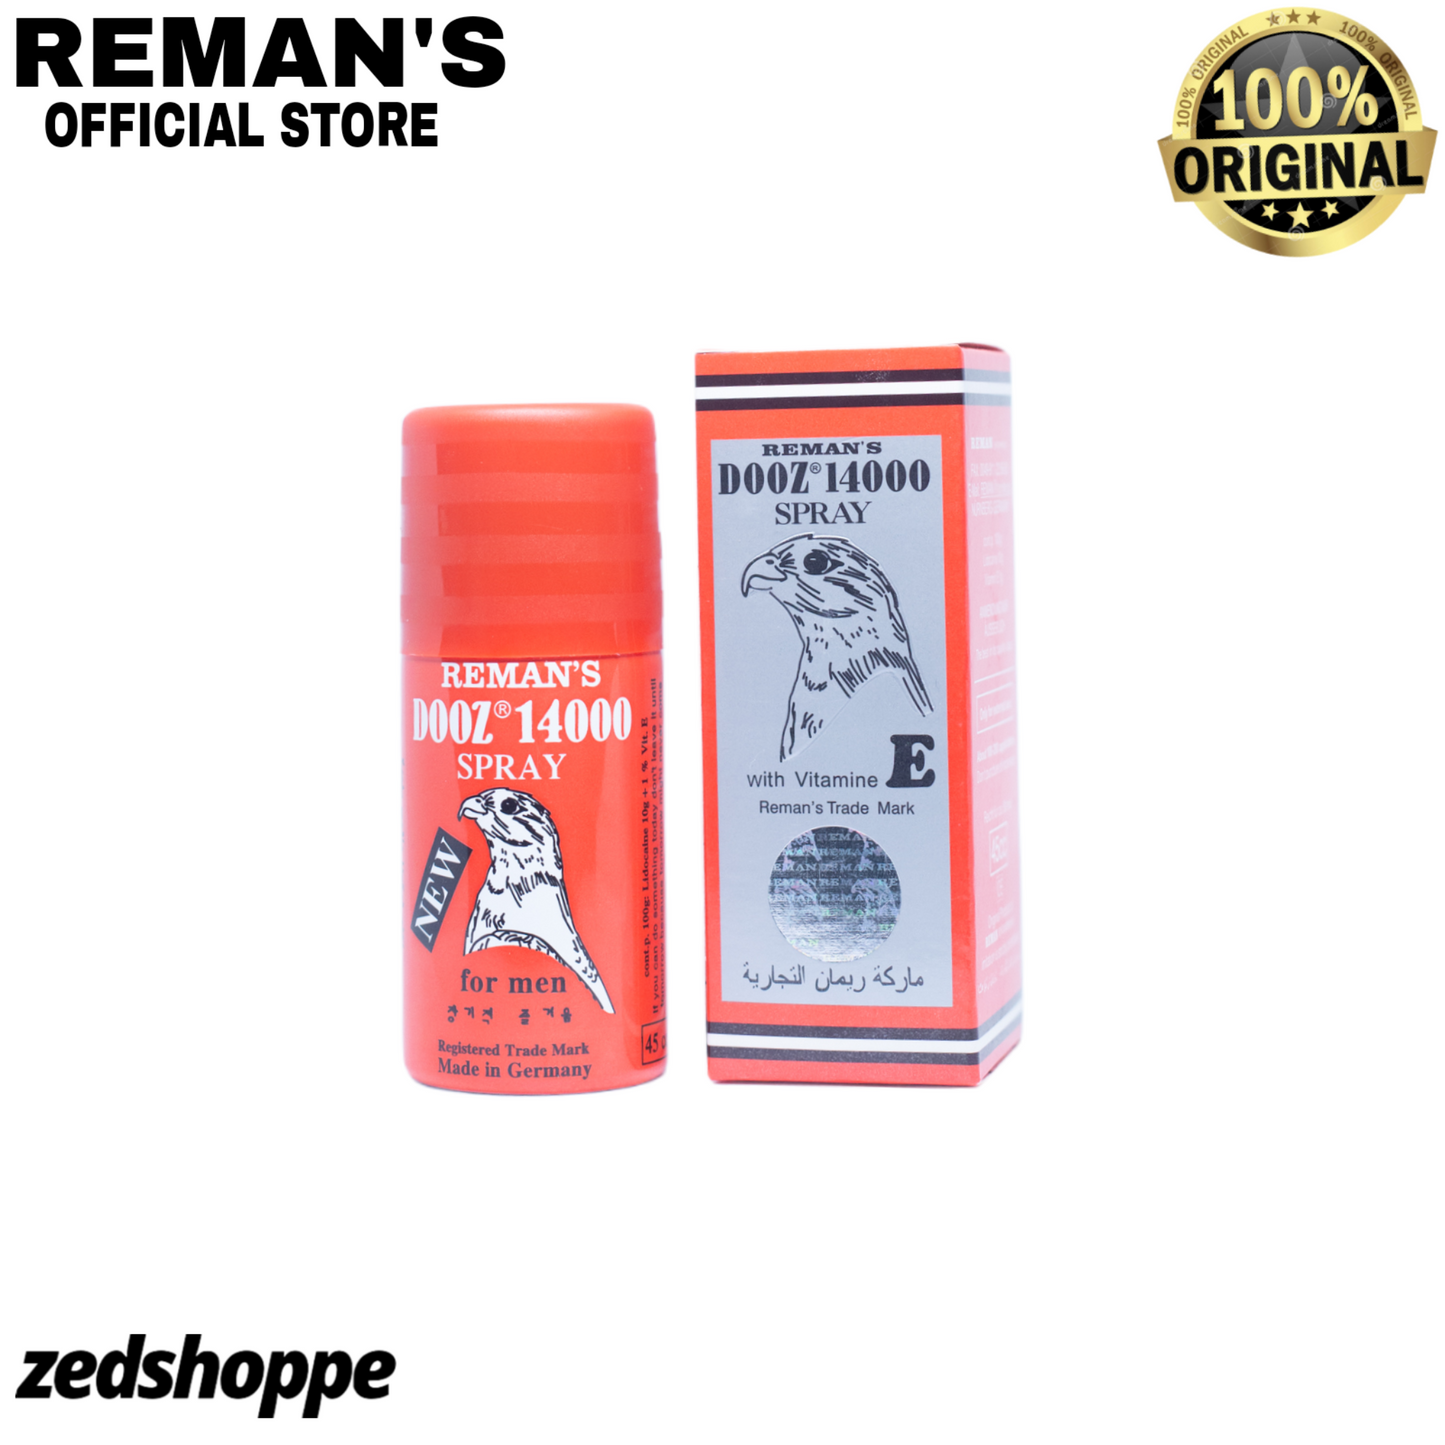 Reman's Dooz 14000 Long Timing Delay Spray With Vitamin E For Men In Pakistan.